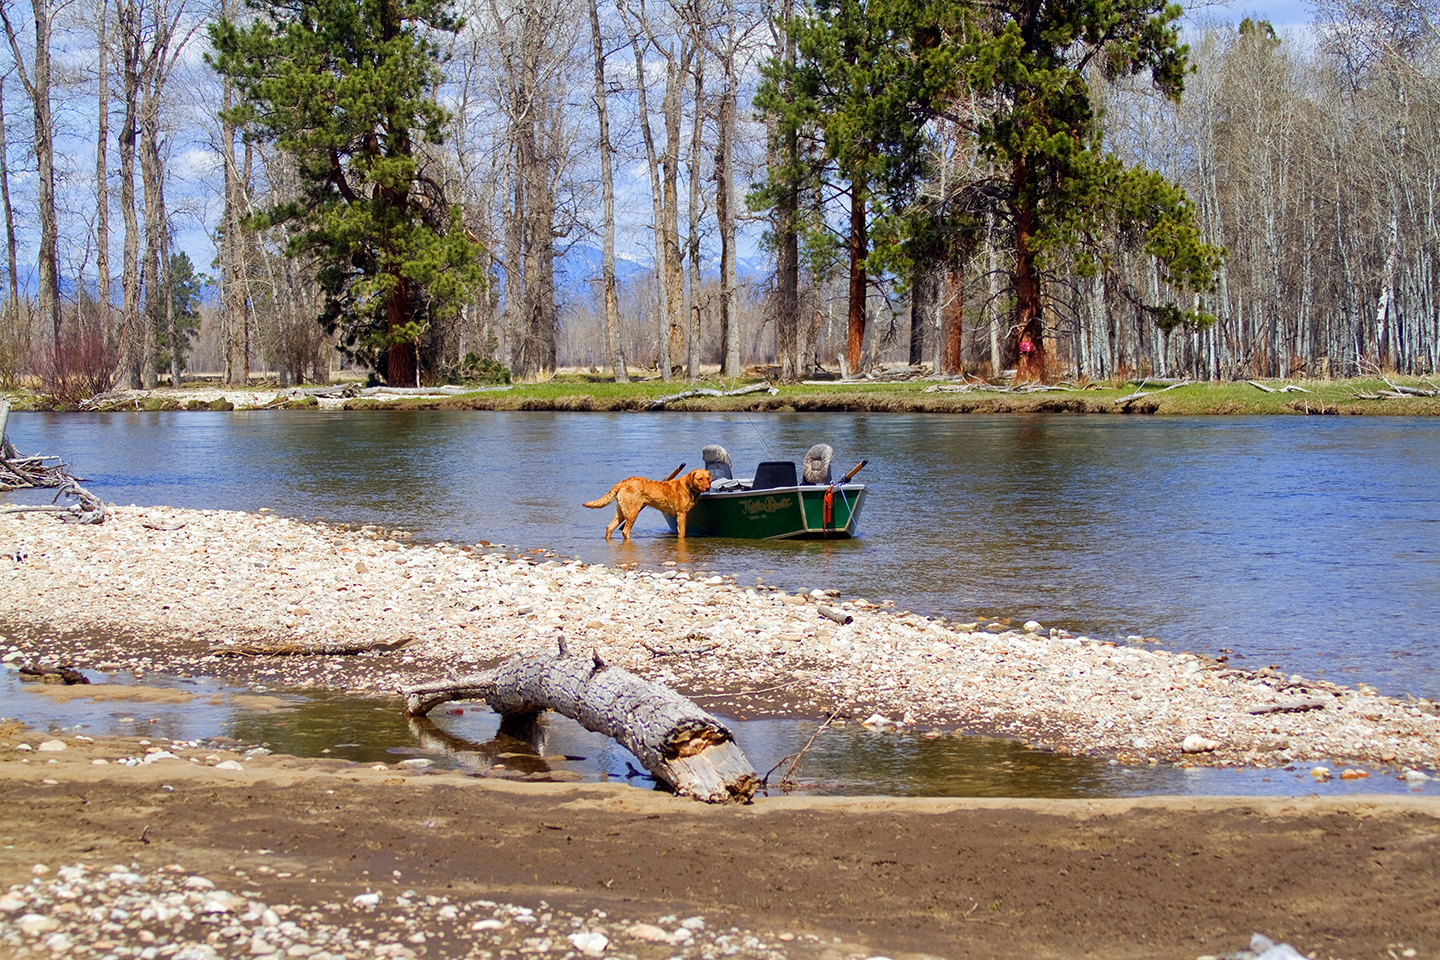 Middle Bitterroot River - Wapiti Waters' photo by Merle Ann Loman